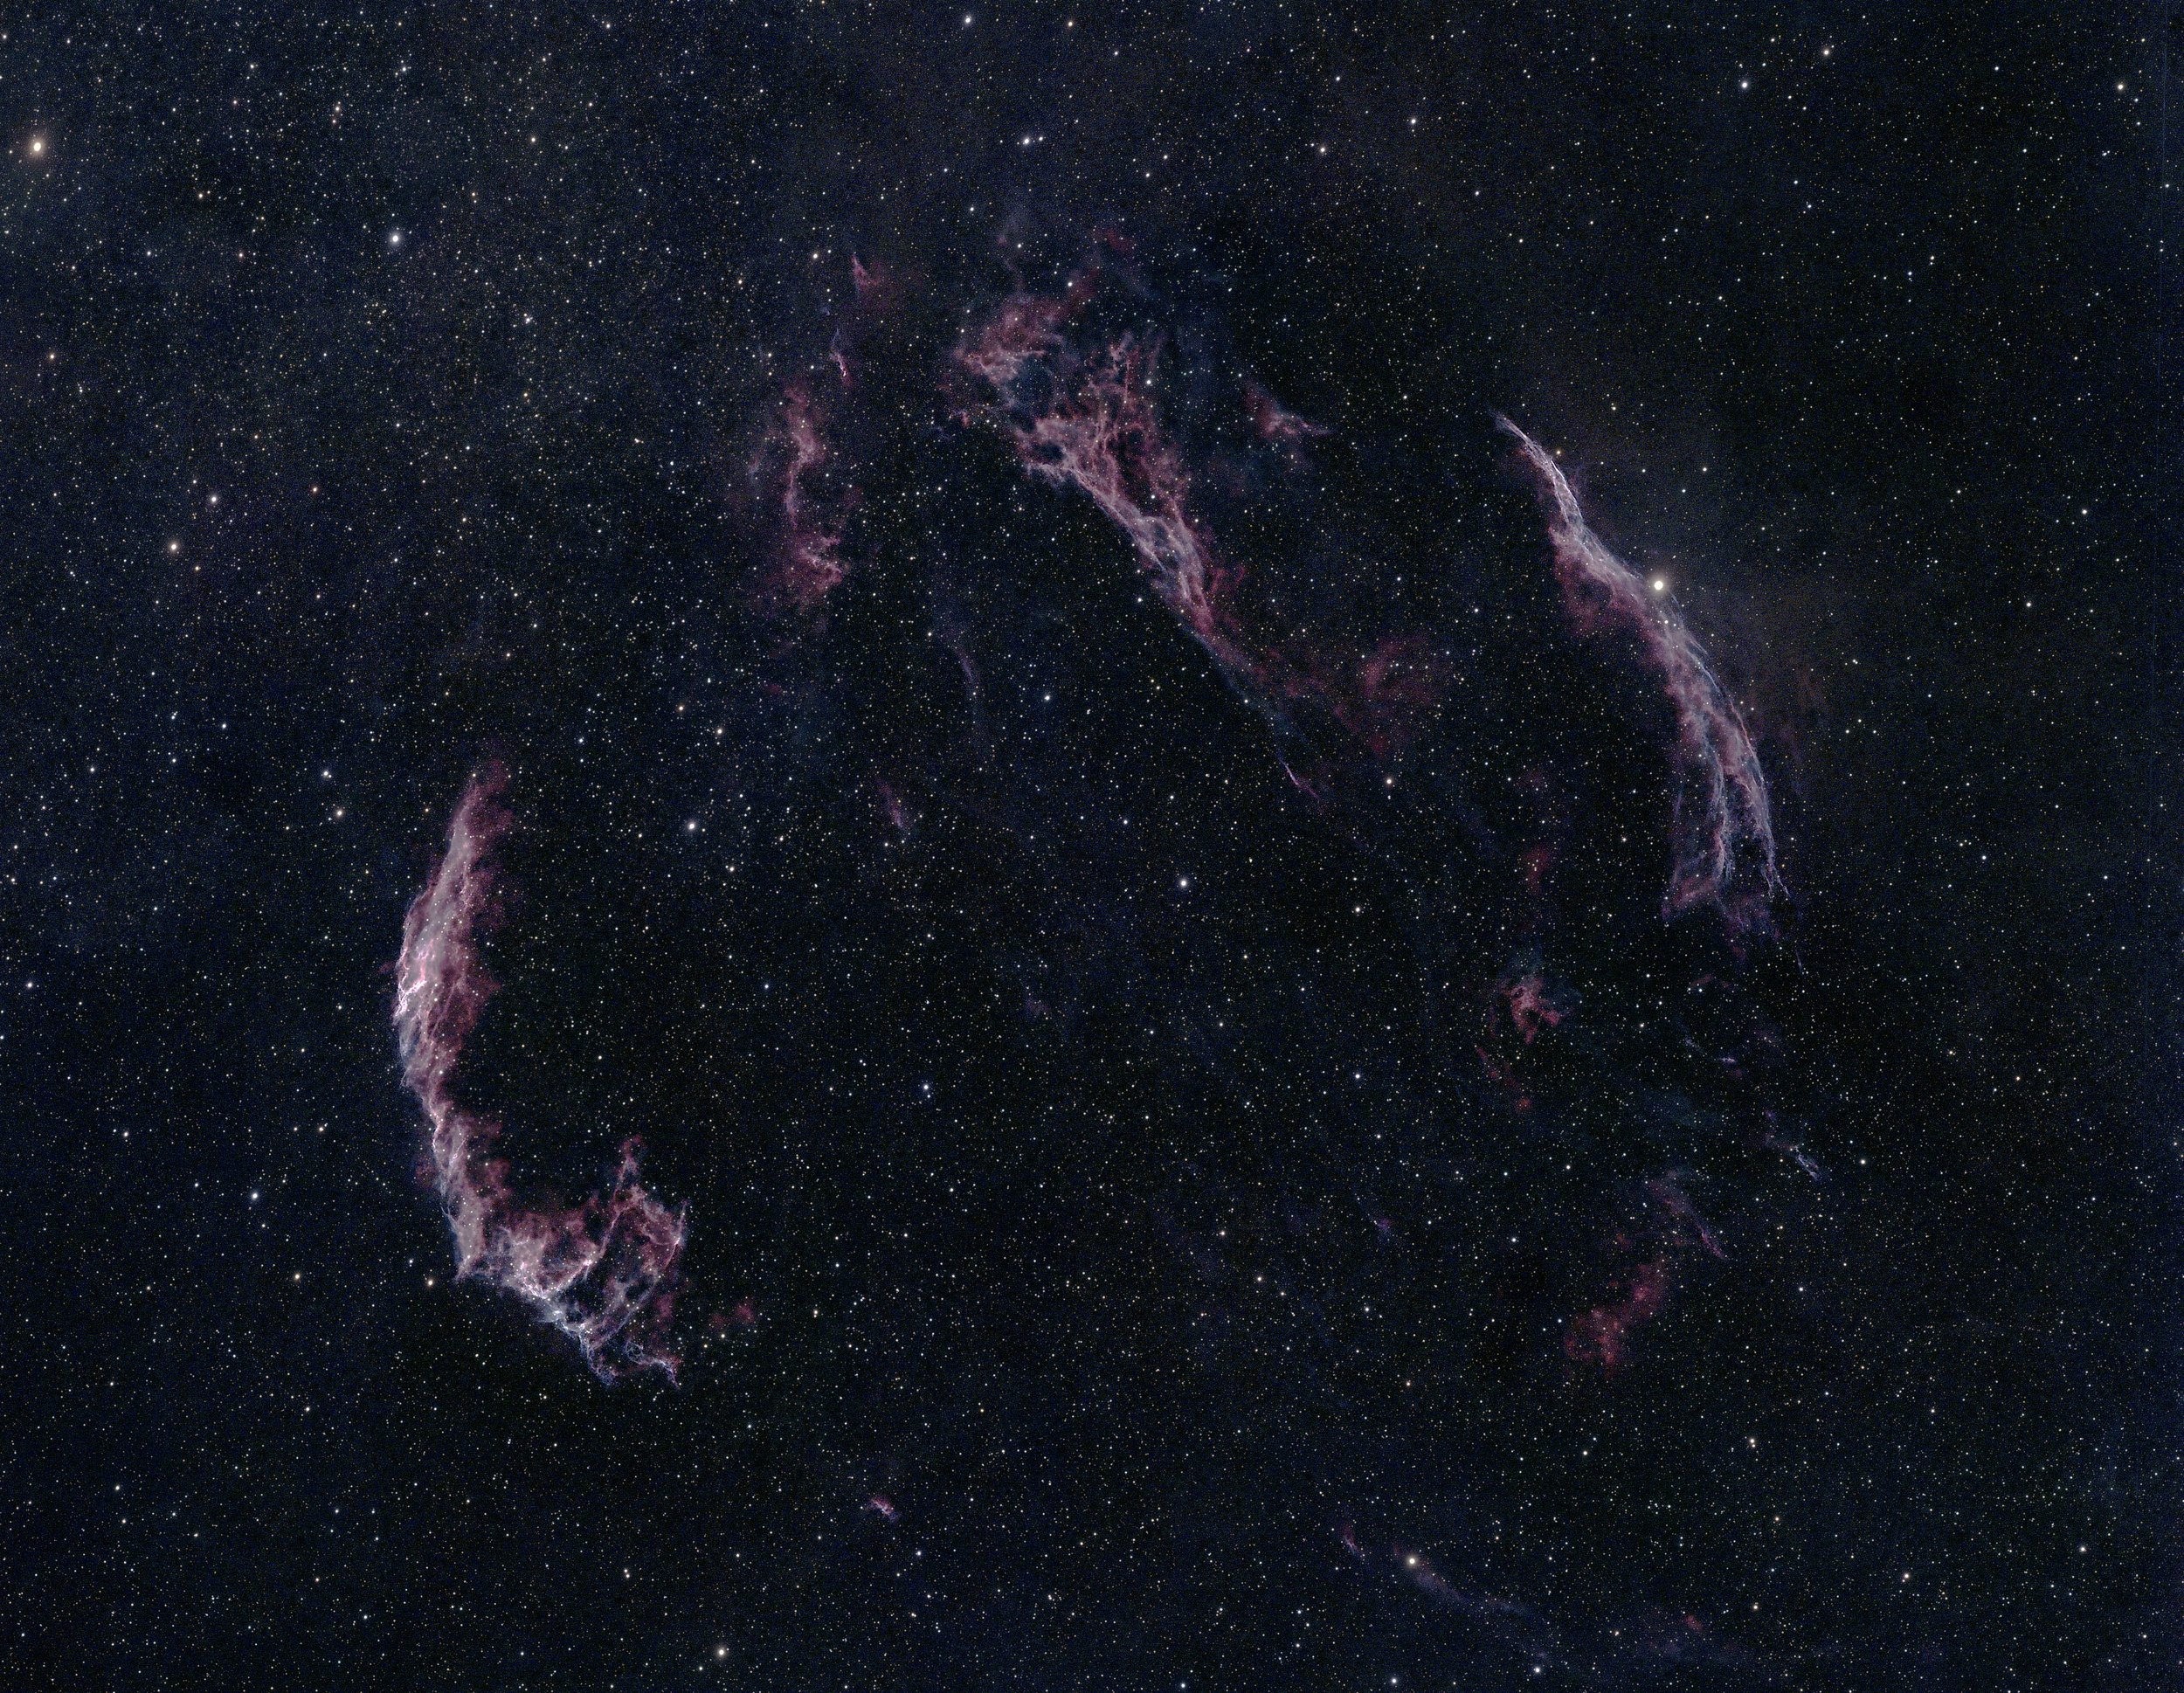 The full Veil Nebula